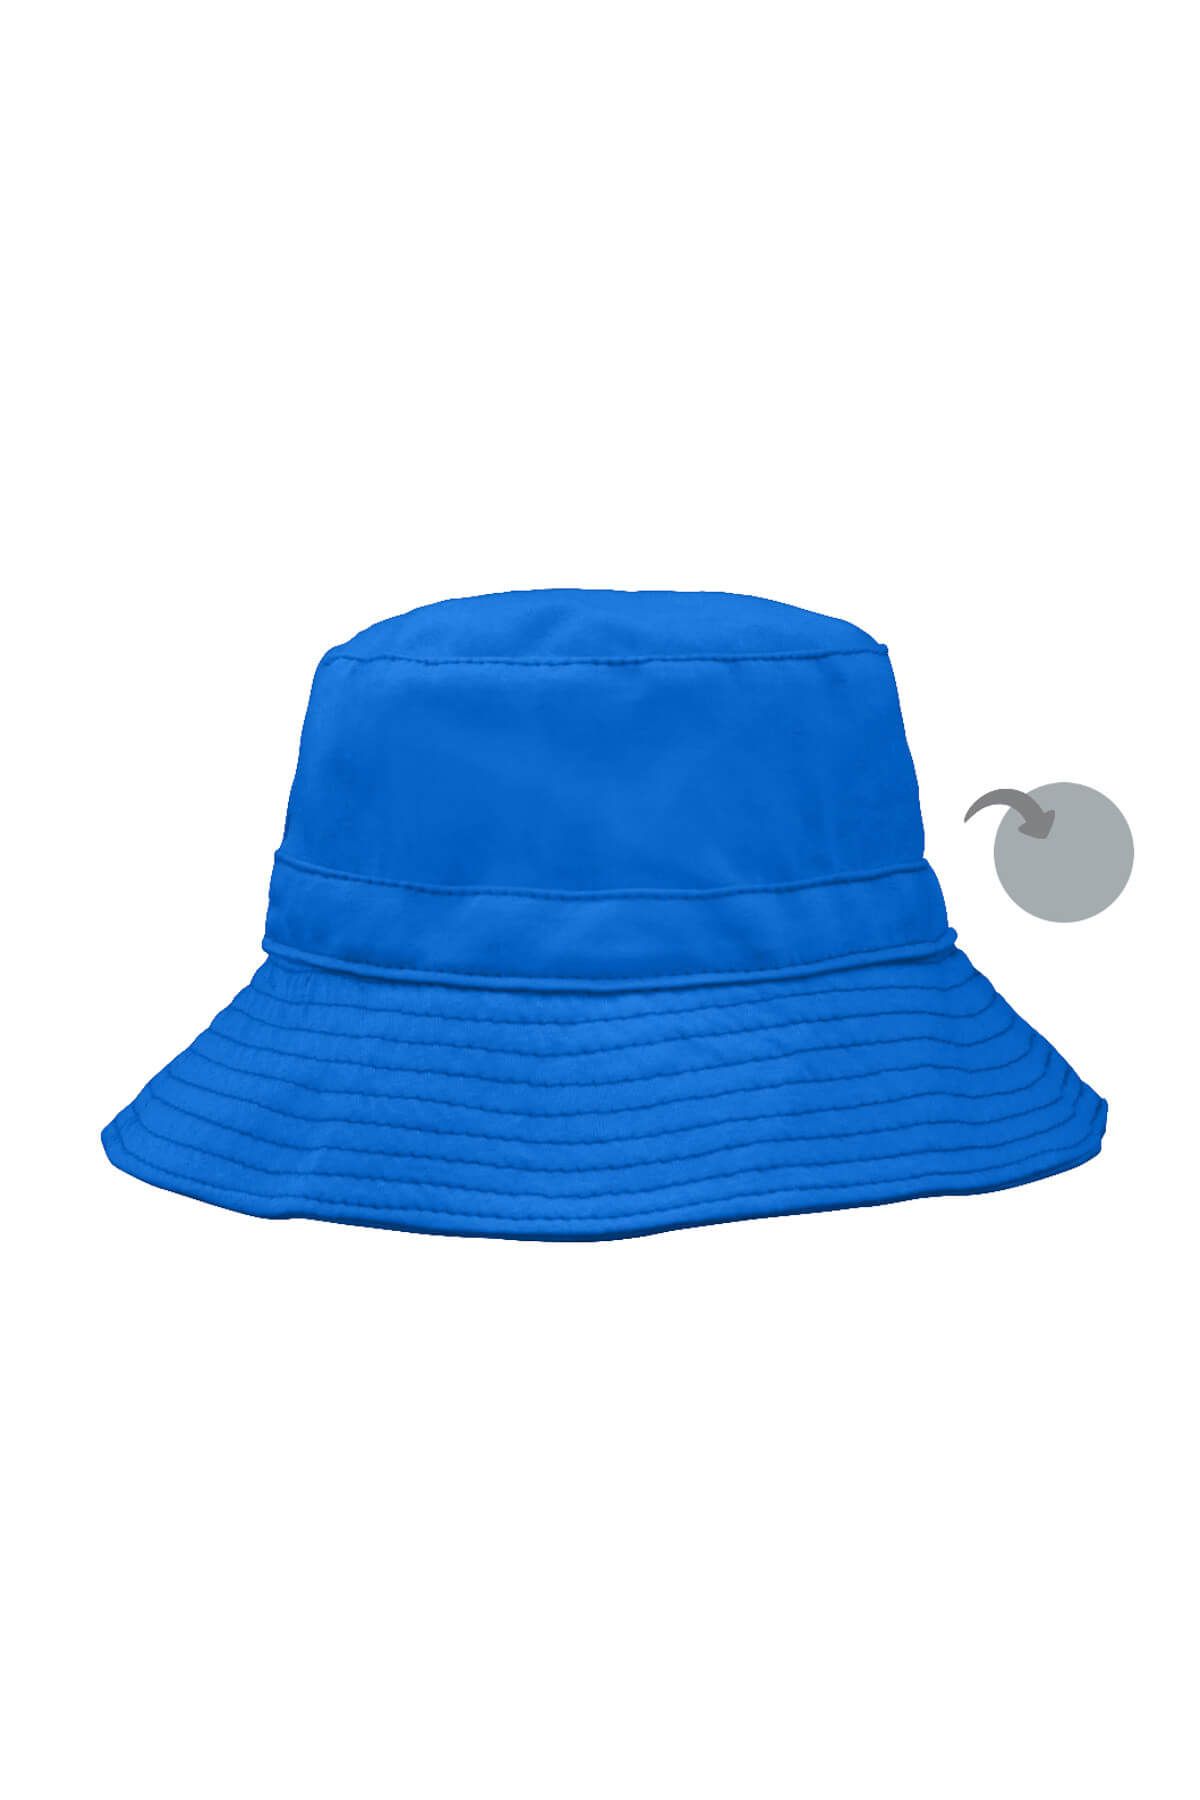 iplay i Play UPF 20 Güneş Korumalı Çift Yönlü Bucket Organik Koton Bebek Şapka 506005-687-52